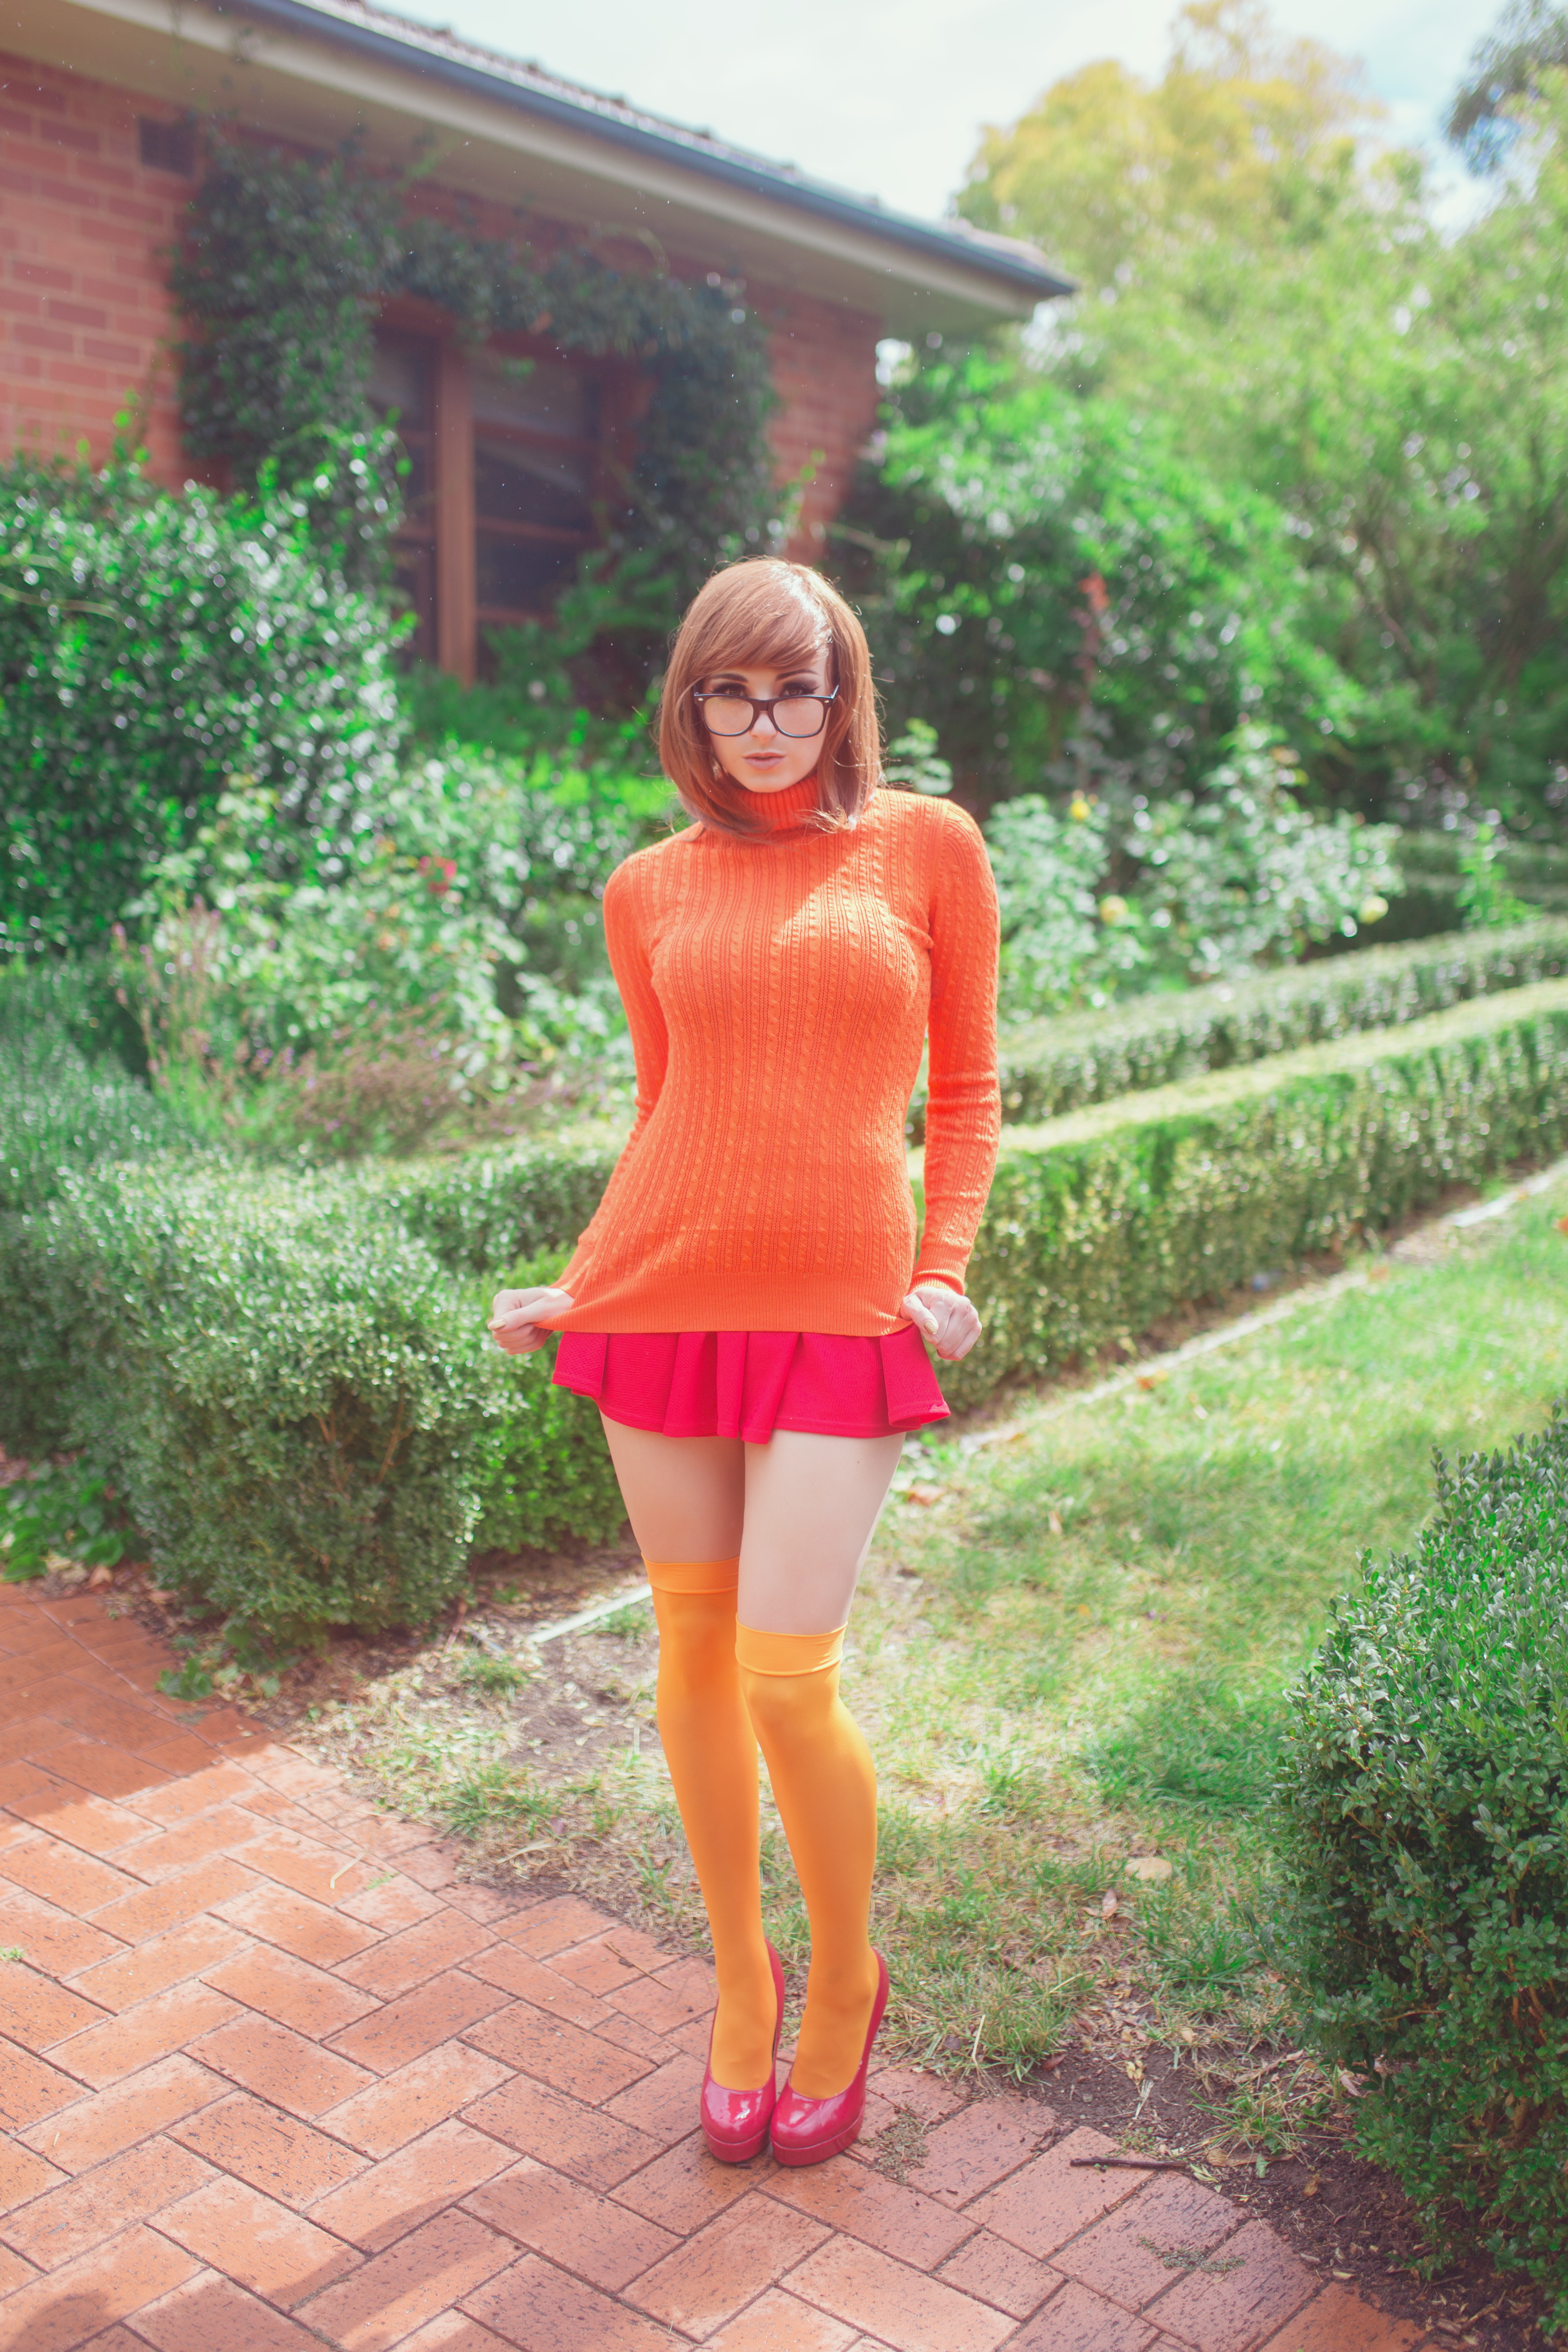 Women Model Women Outdoors Cosplay Scooby Doo Velma Dinkley Women With Glasses Turtlenecks Sweater S 3472x5208